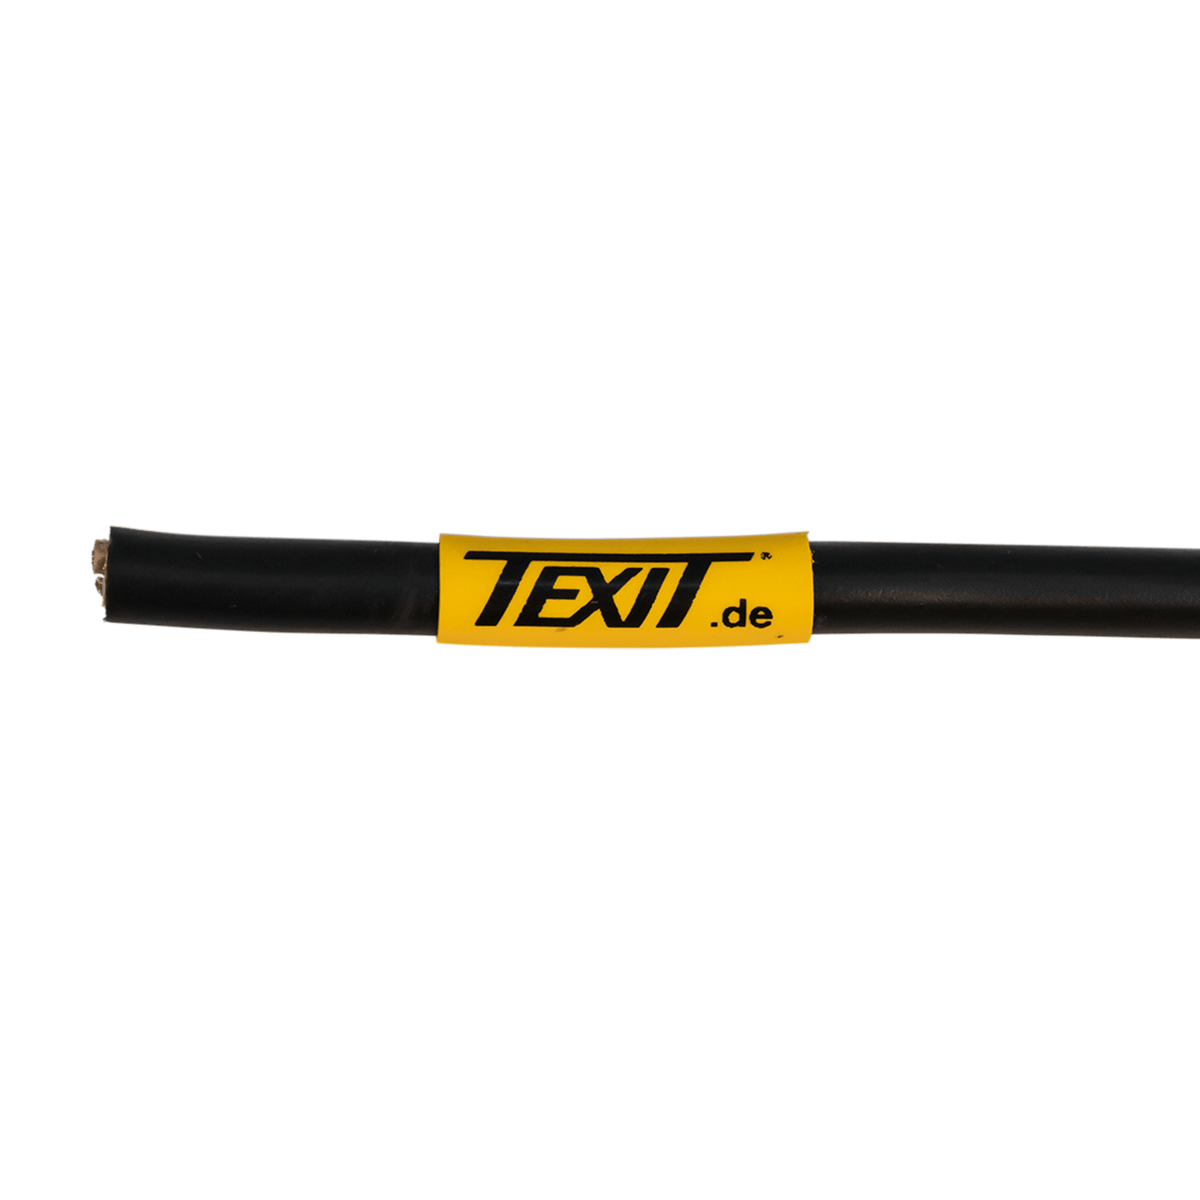 HTX-LW3 Heat shrink marker, assembled, on heat shrink tubing